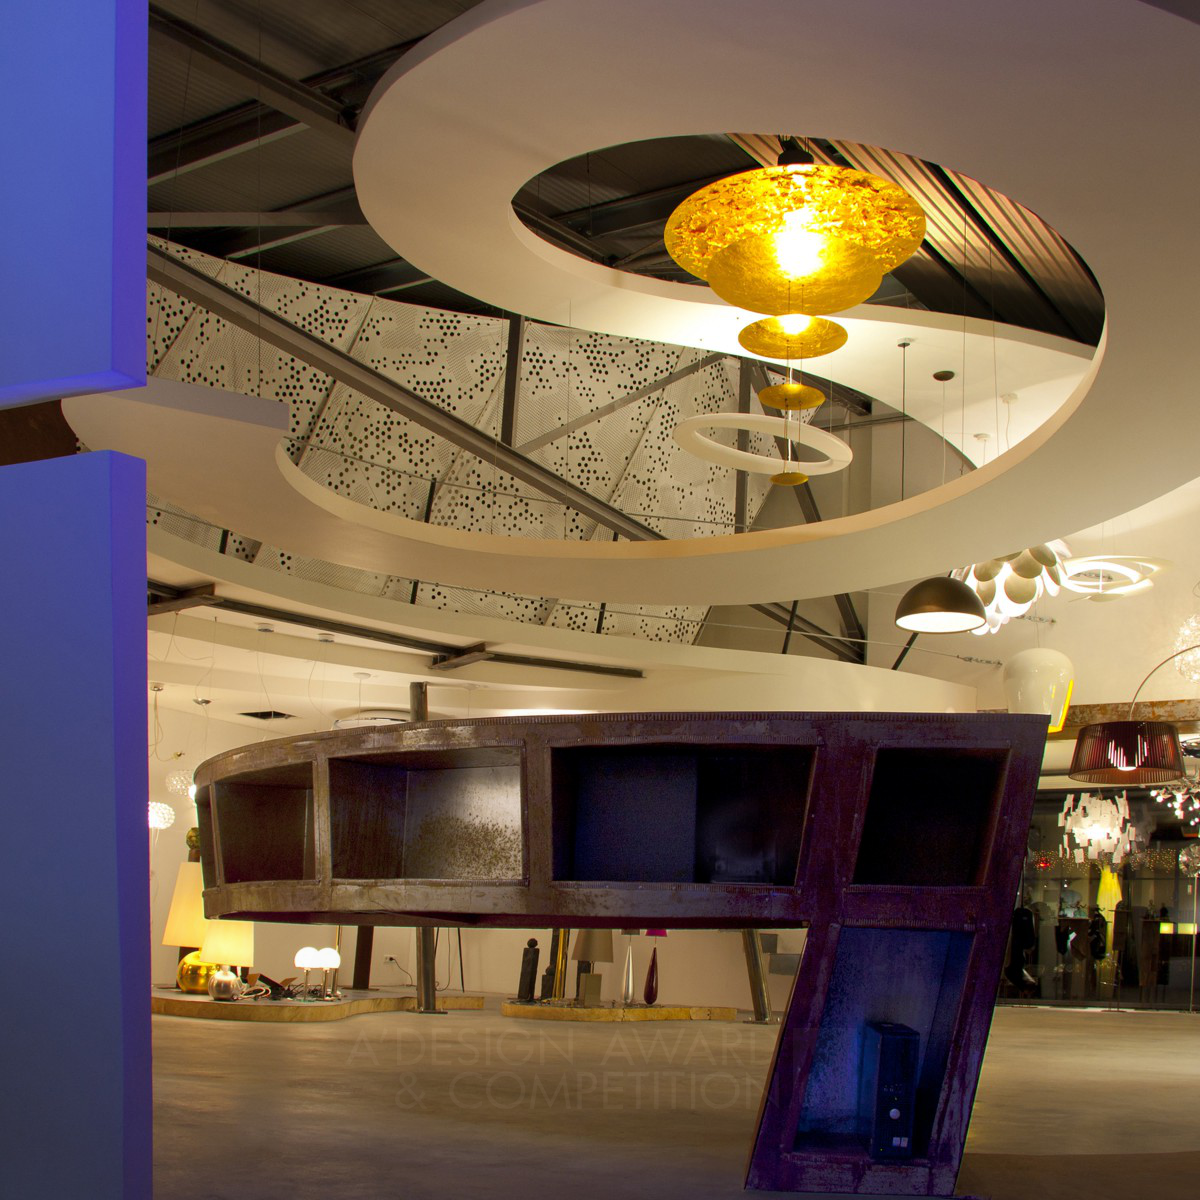 Light Design Center Speyer, Germany lighting exhibition and shop by Peter Stasek